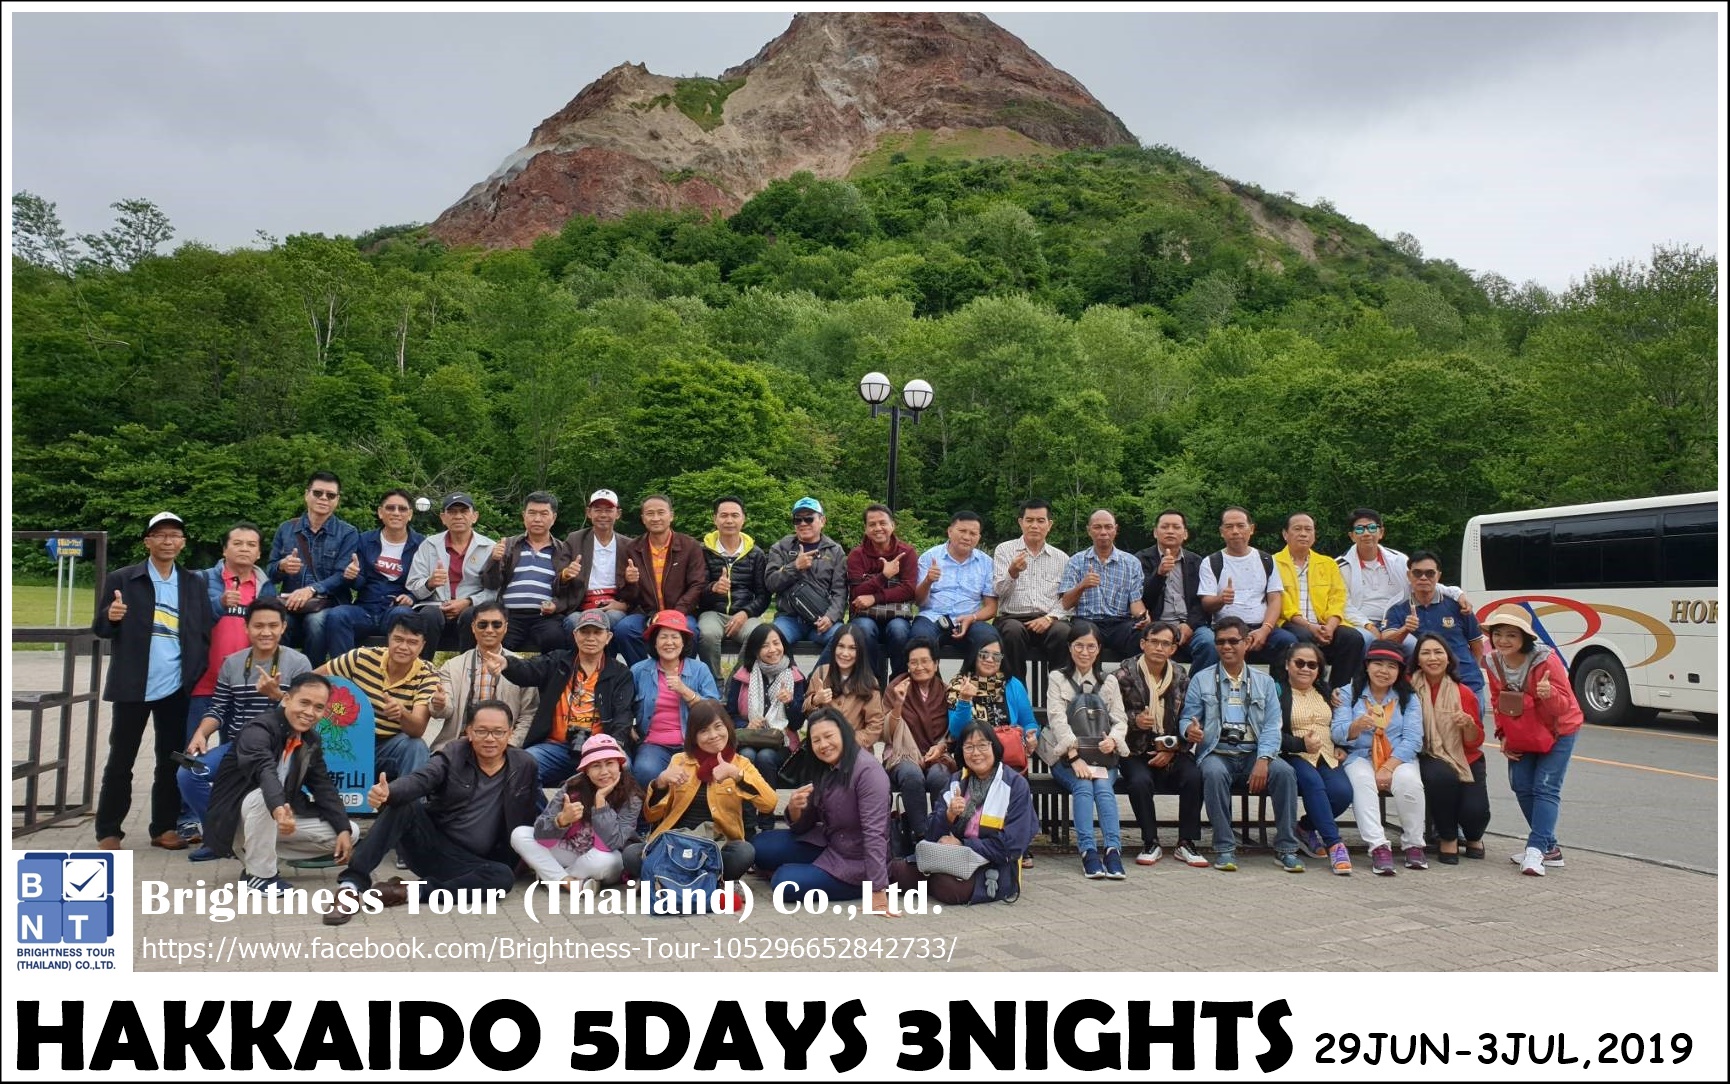 HOKKAIDO TRIP 5DAYS 3NIGHTS (29JUN-3JUL,2019)